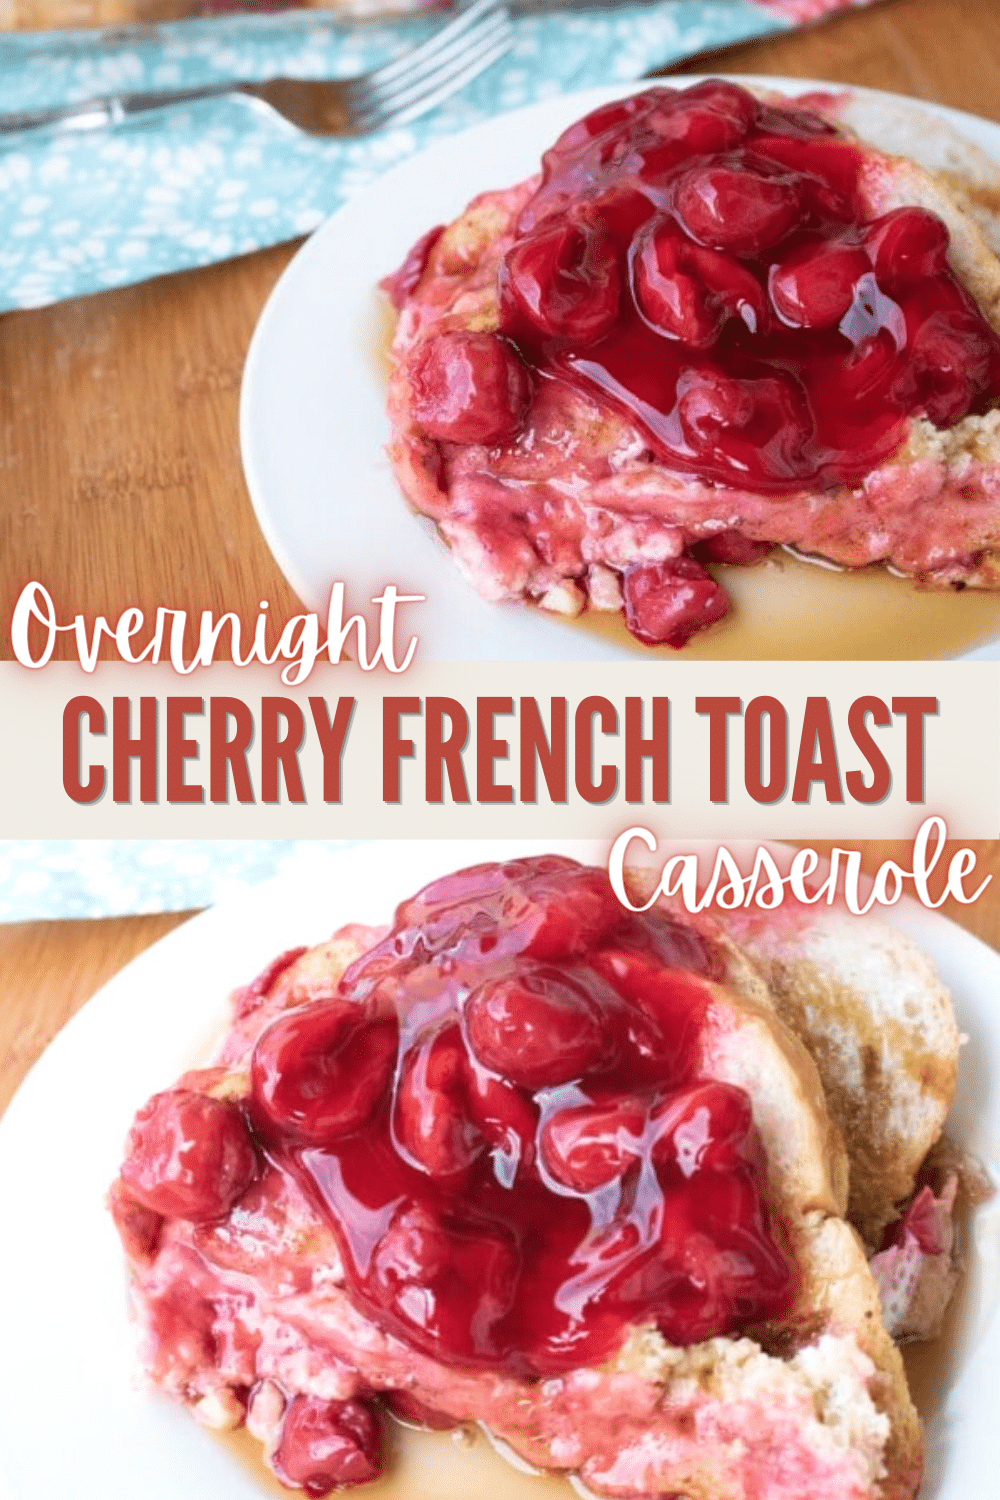 Overnight cherry baked French toast casserole.